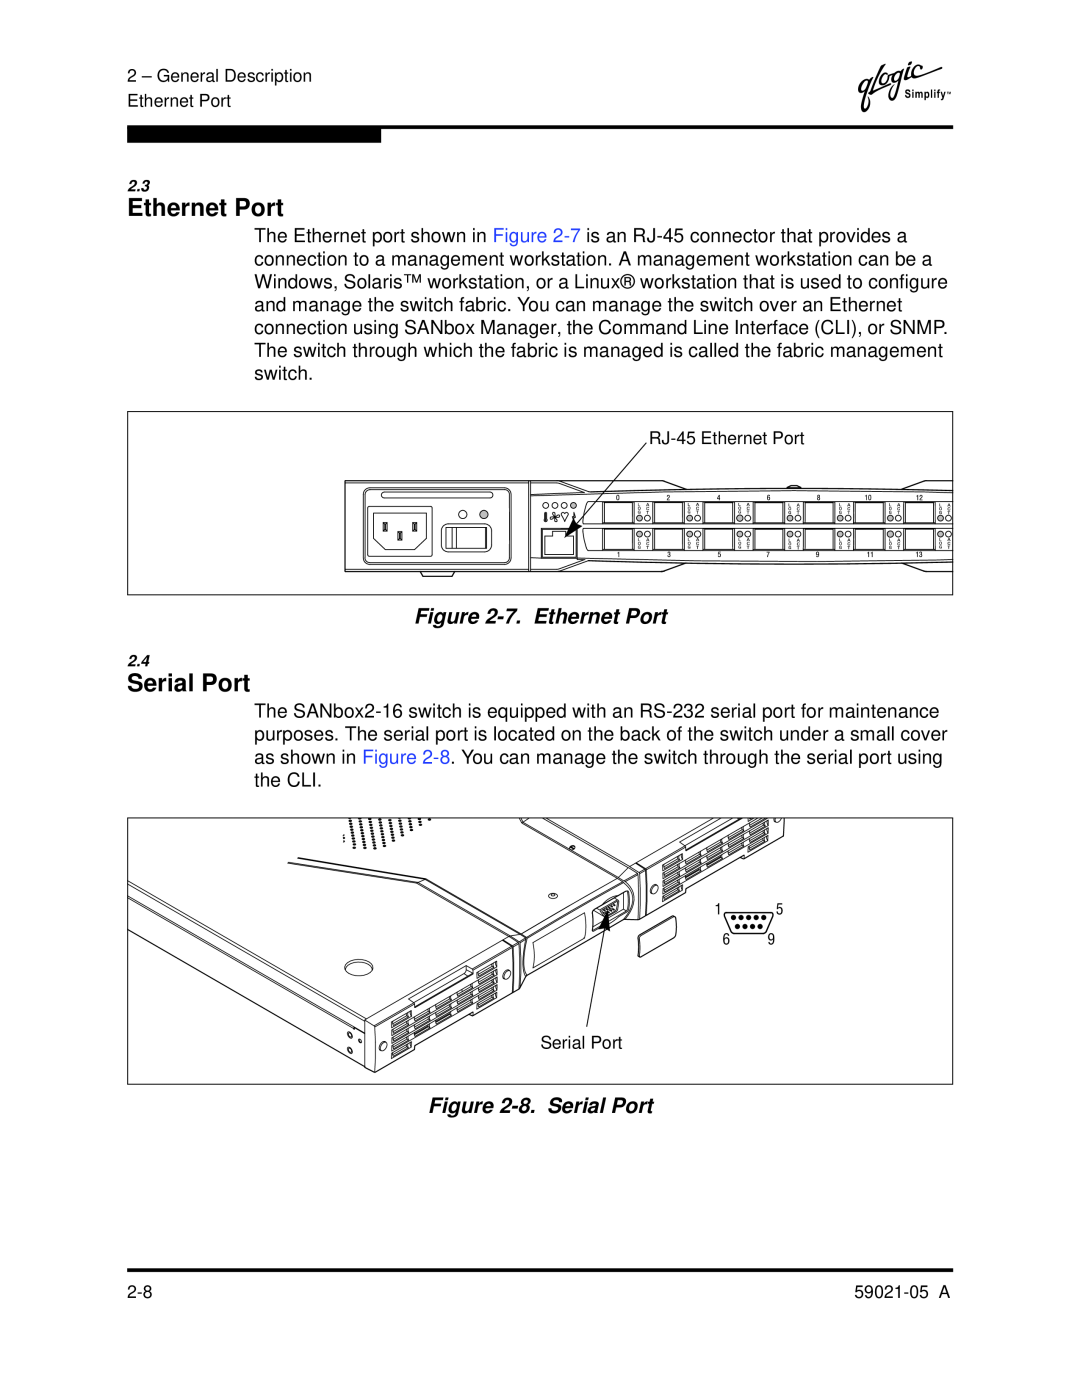 Q-Logic 59021-05 manual 7. Ethernet Port, 8. Serial Port 